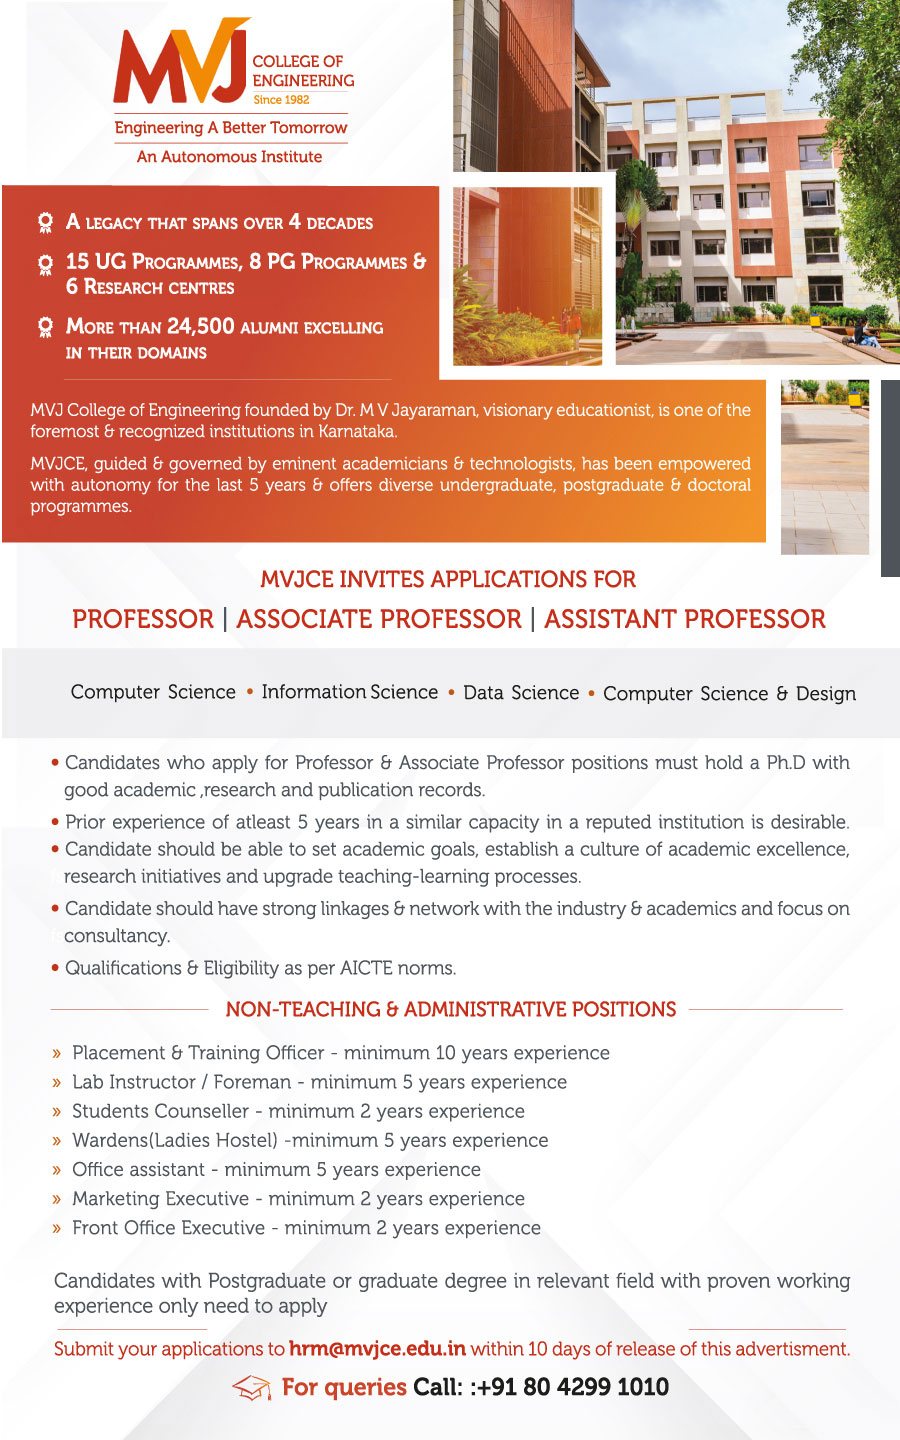 MVJCE Invites applications for academic Positions